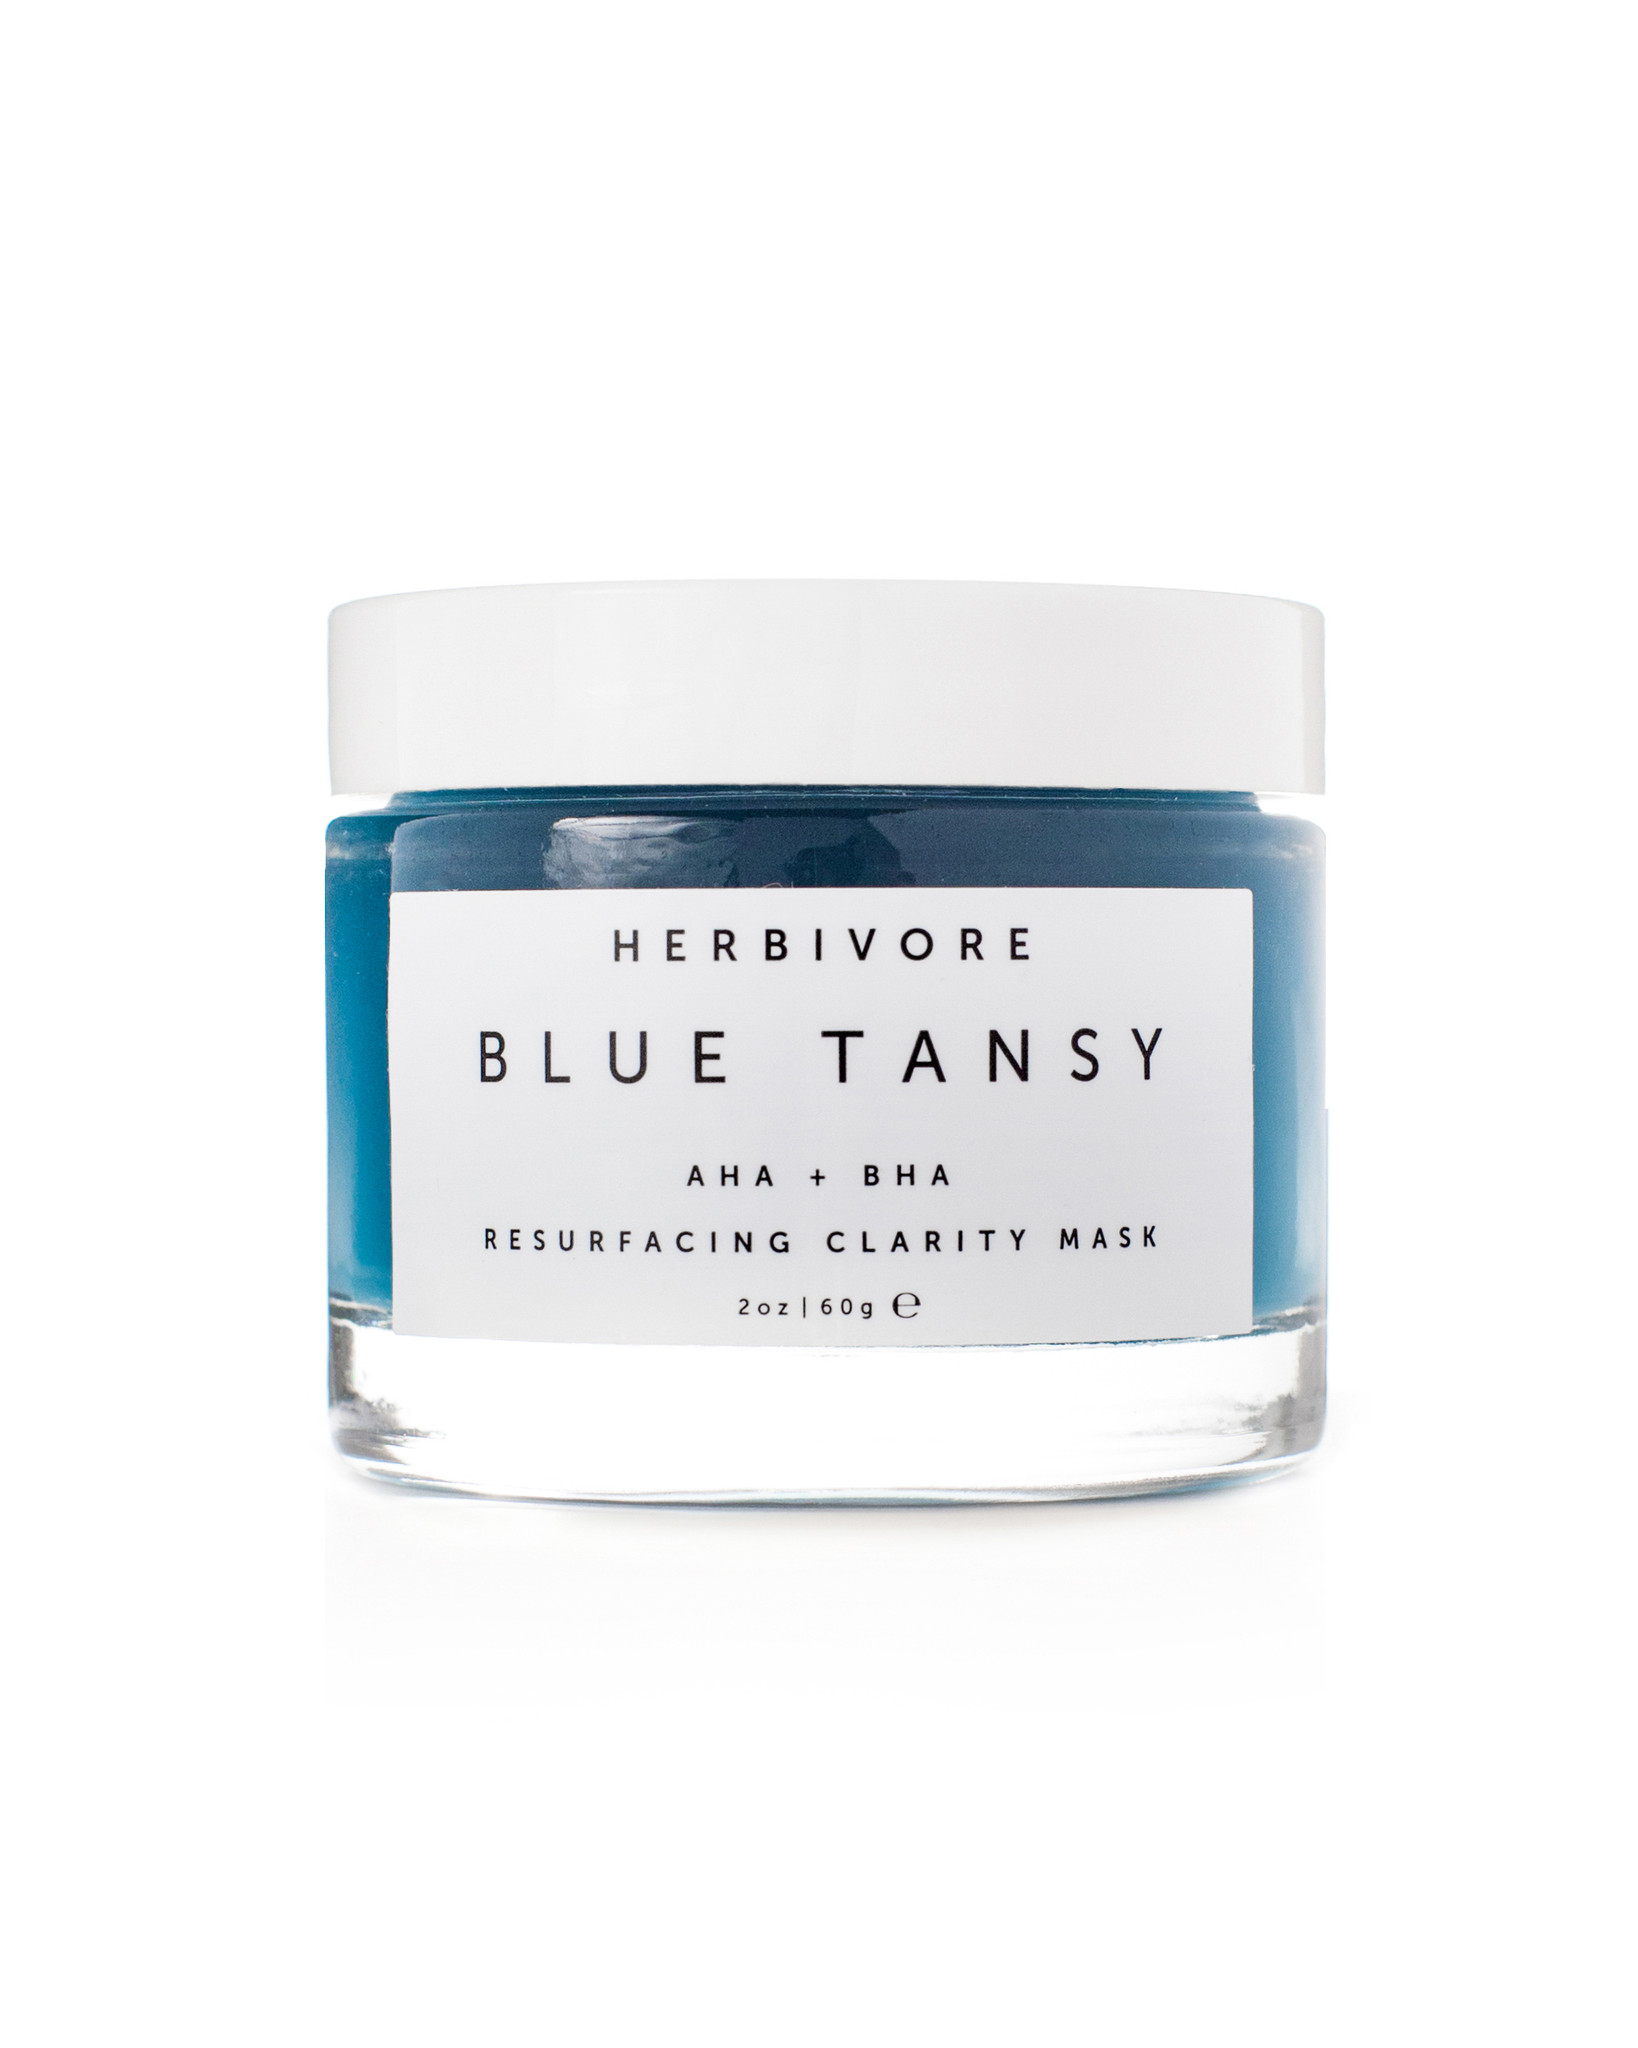 Herbivore Blue Tansy AHA + BHA Resurfacing Clarity Mask